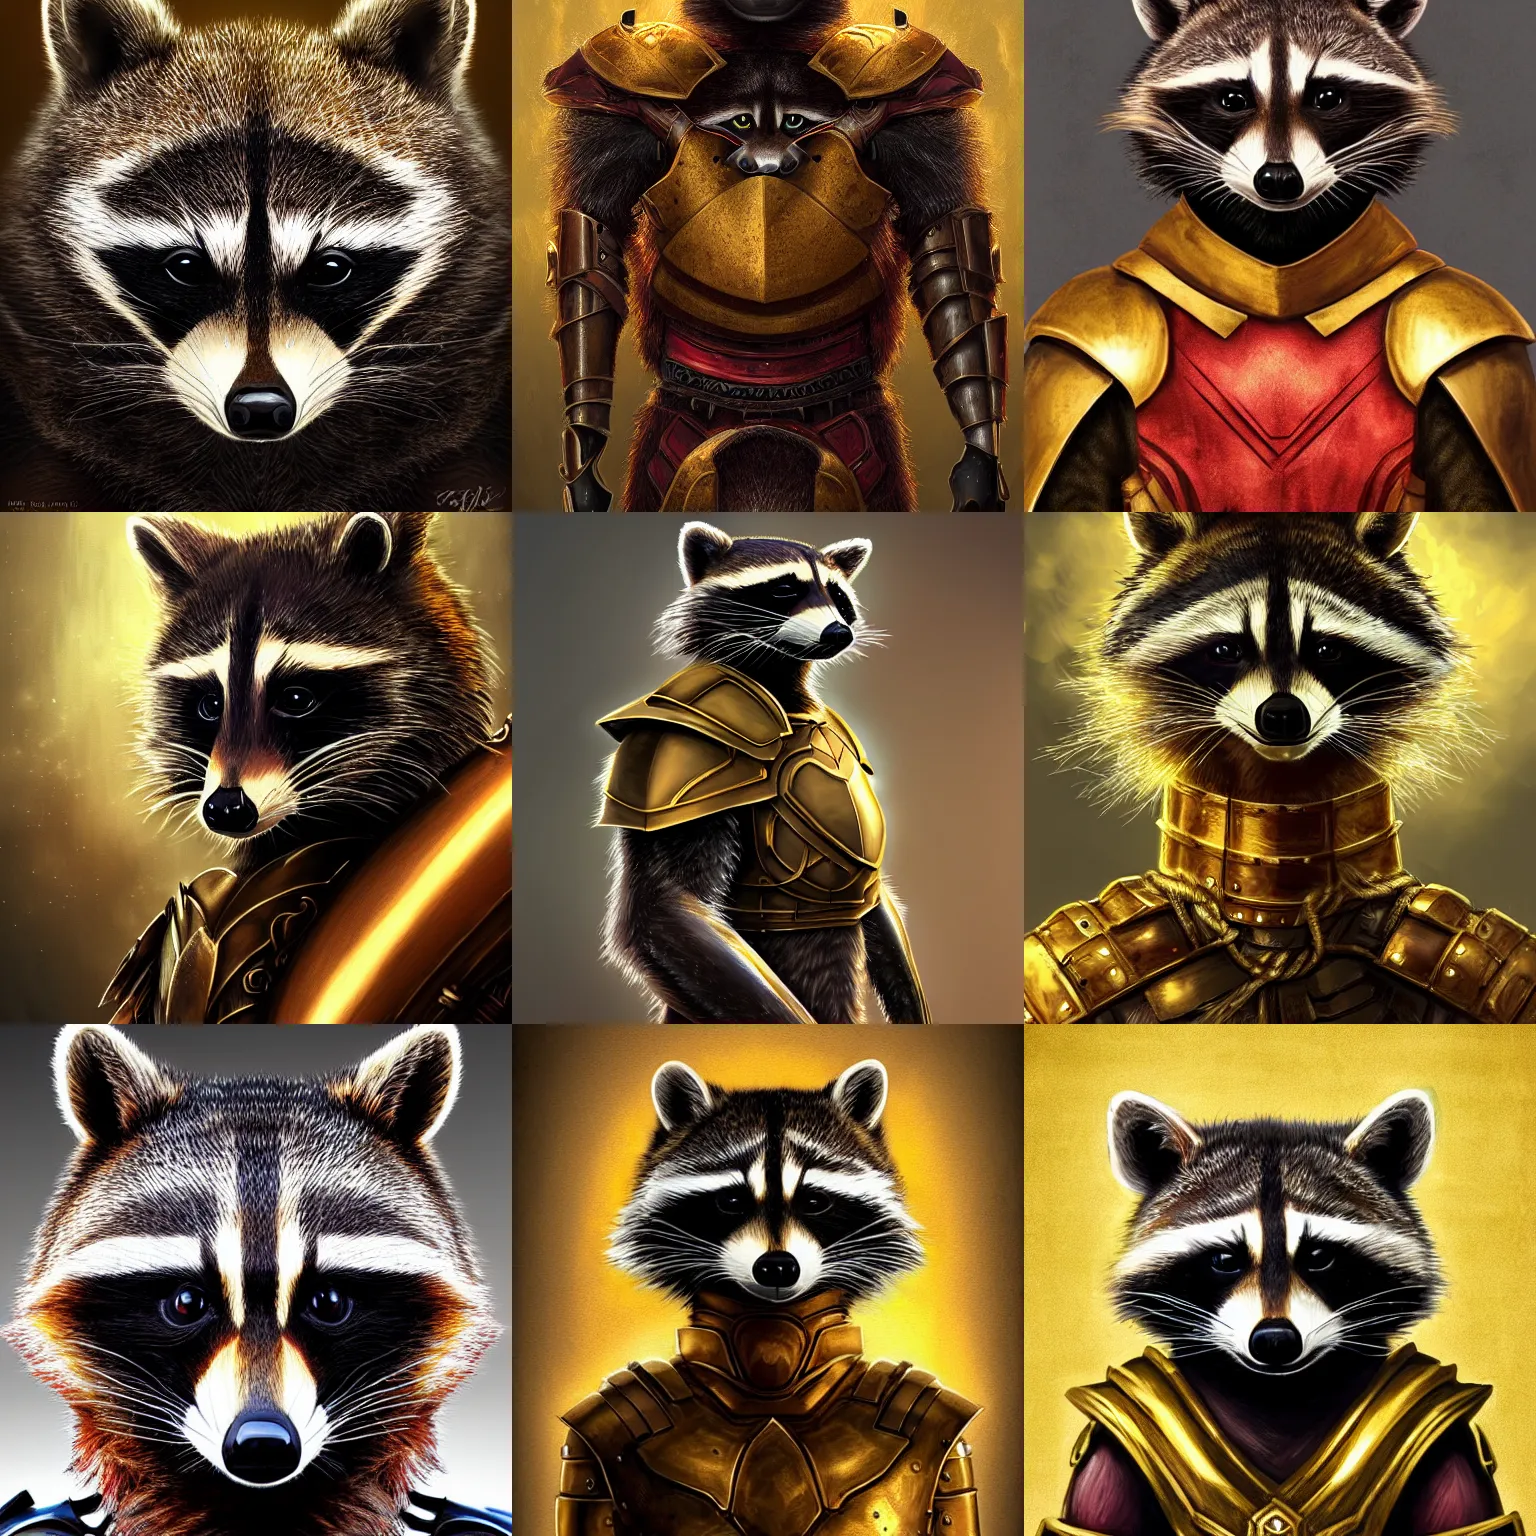 Prompt: Portrait of a raccoon humanoid wearing heavy armor. Gold armor. Red lighting. Dark fantasy, digital art, HD, detailed.